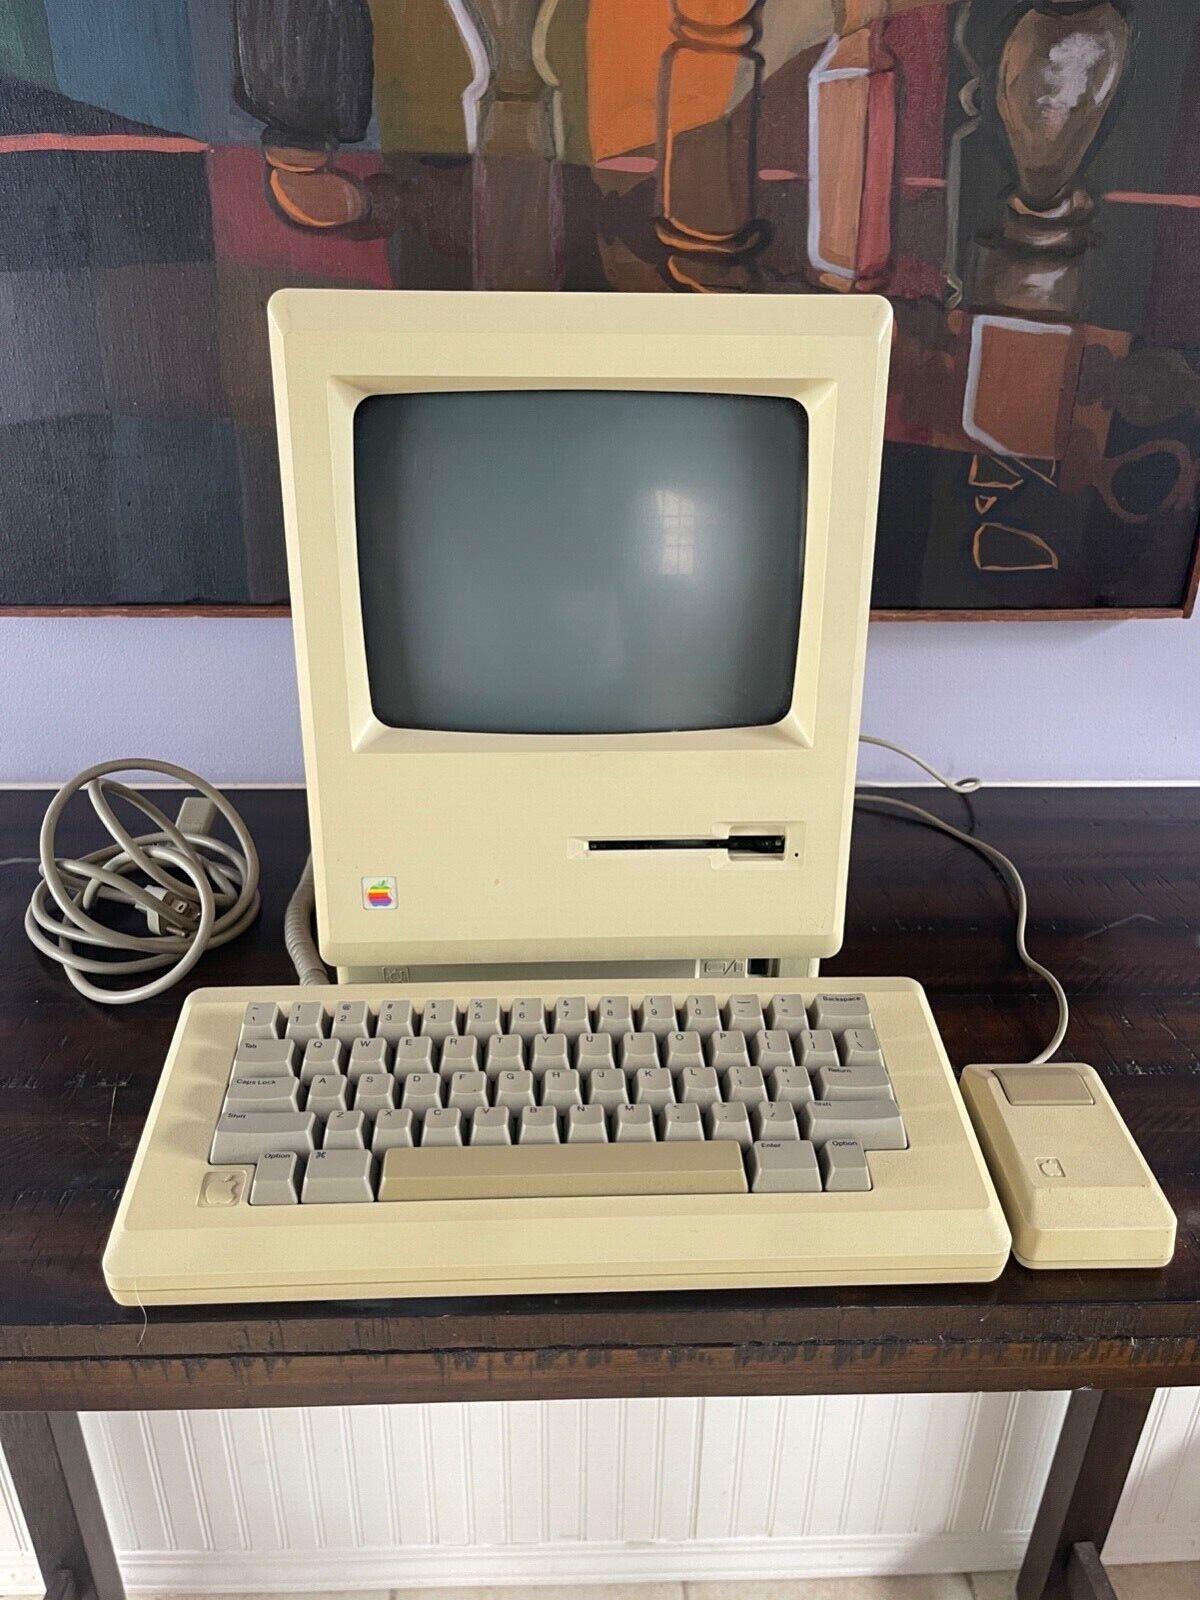 Apple Macintosh 128K M0001 Computer (1984) - confirmed 128k after booting OS